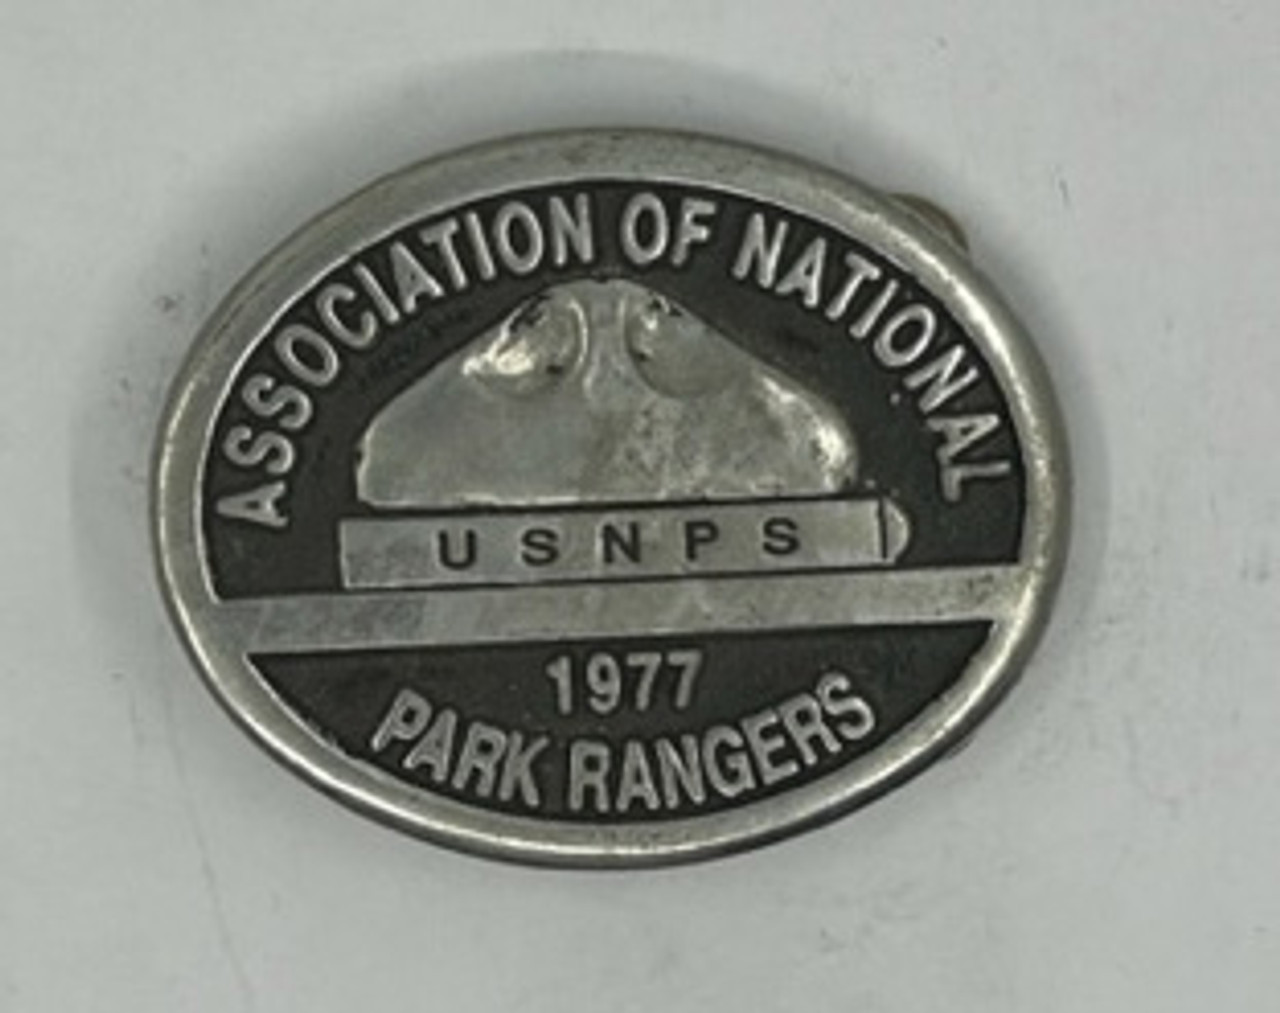 Association of National Park Rangers Buckle